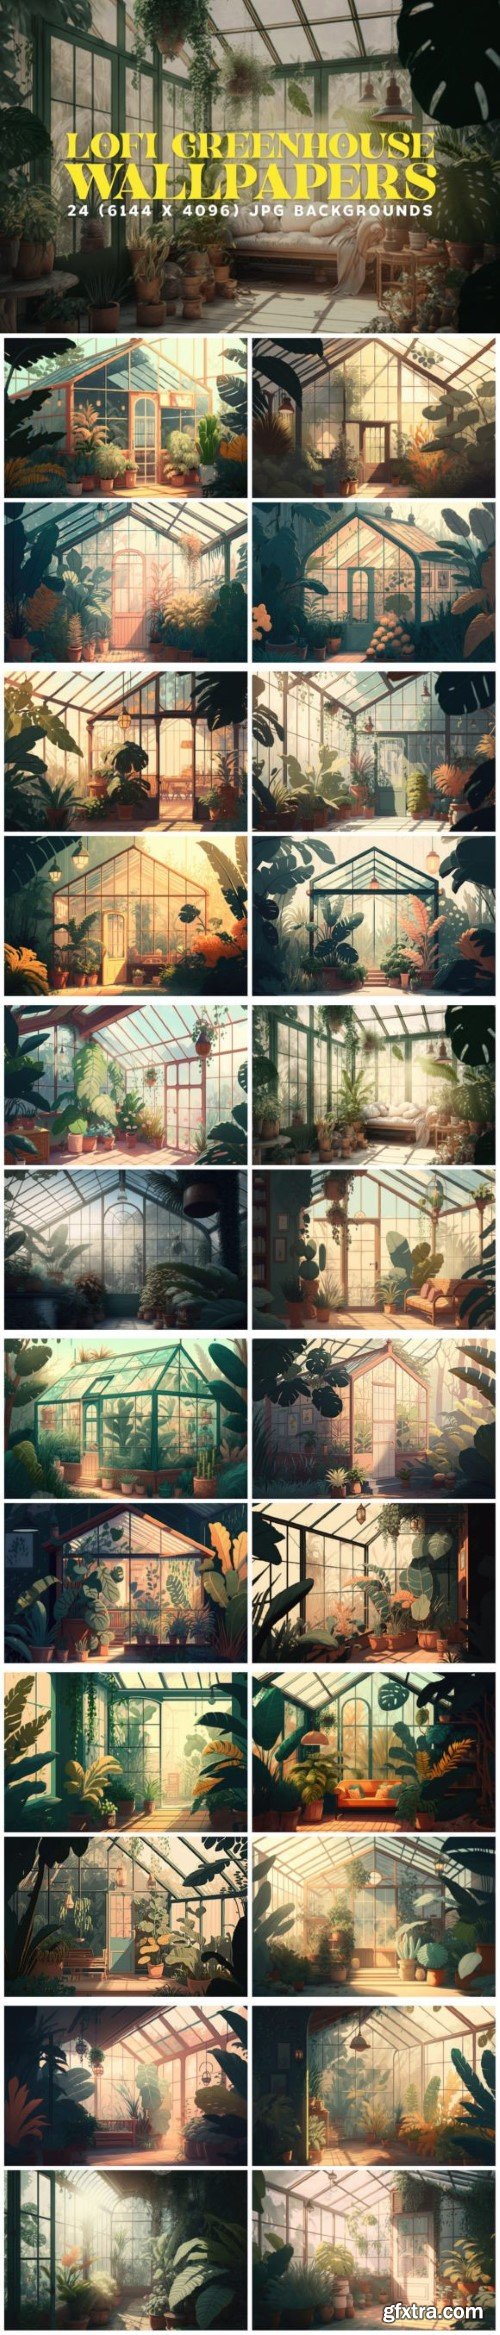 24 Cozy Lofi Greenhouse Backgrounds 6K